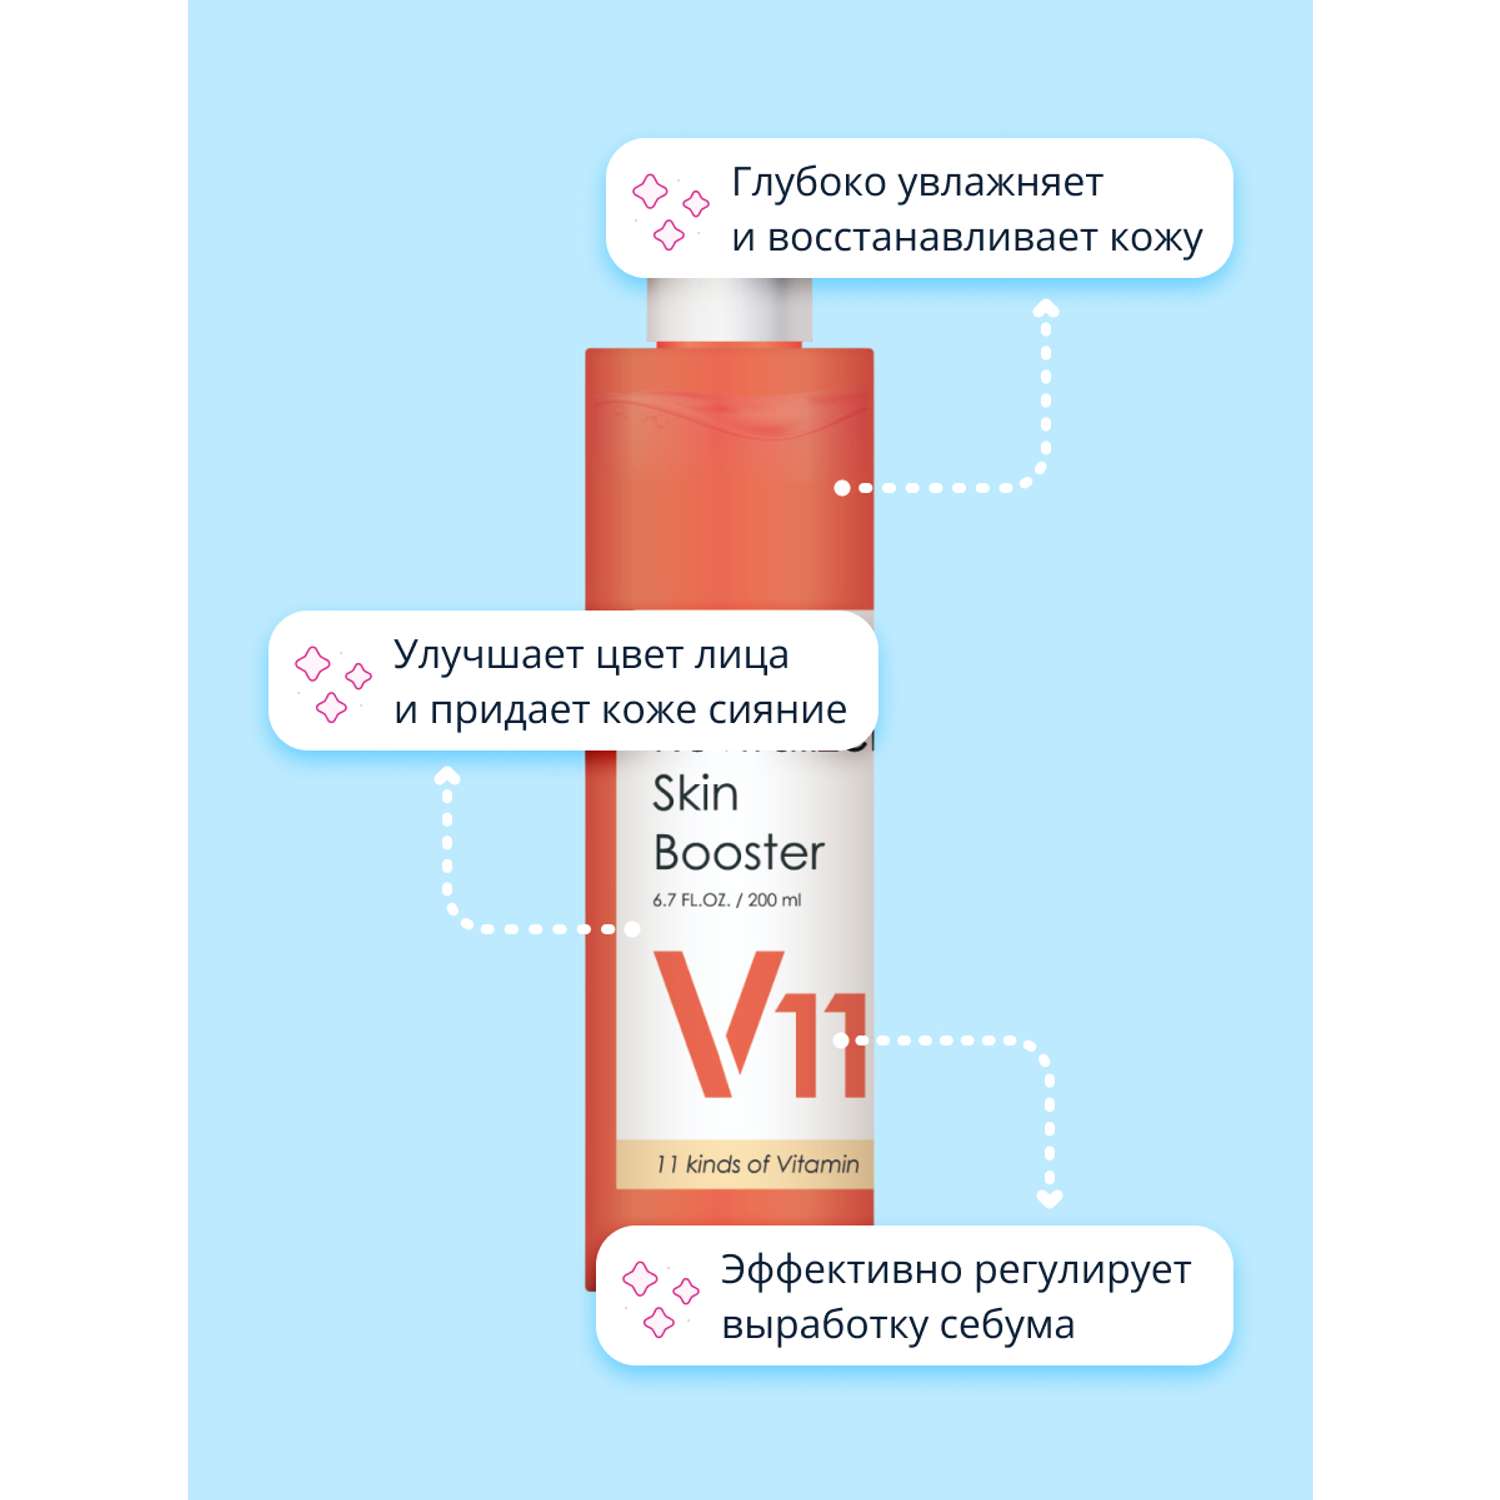 Тонер-бустер для лица Vita Planet V11 с витаминами (восстанавливающий и для сияния кожи) 200 мл - фото 3